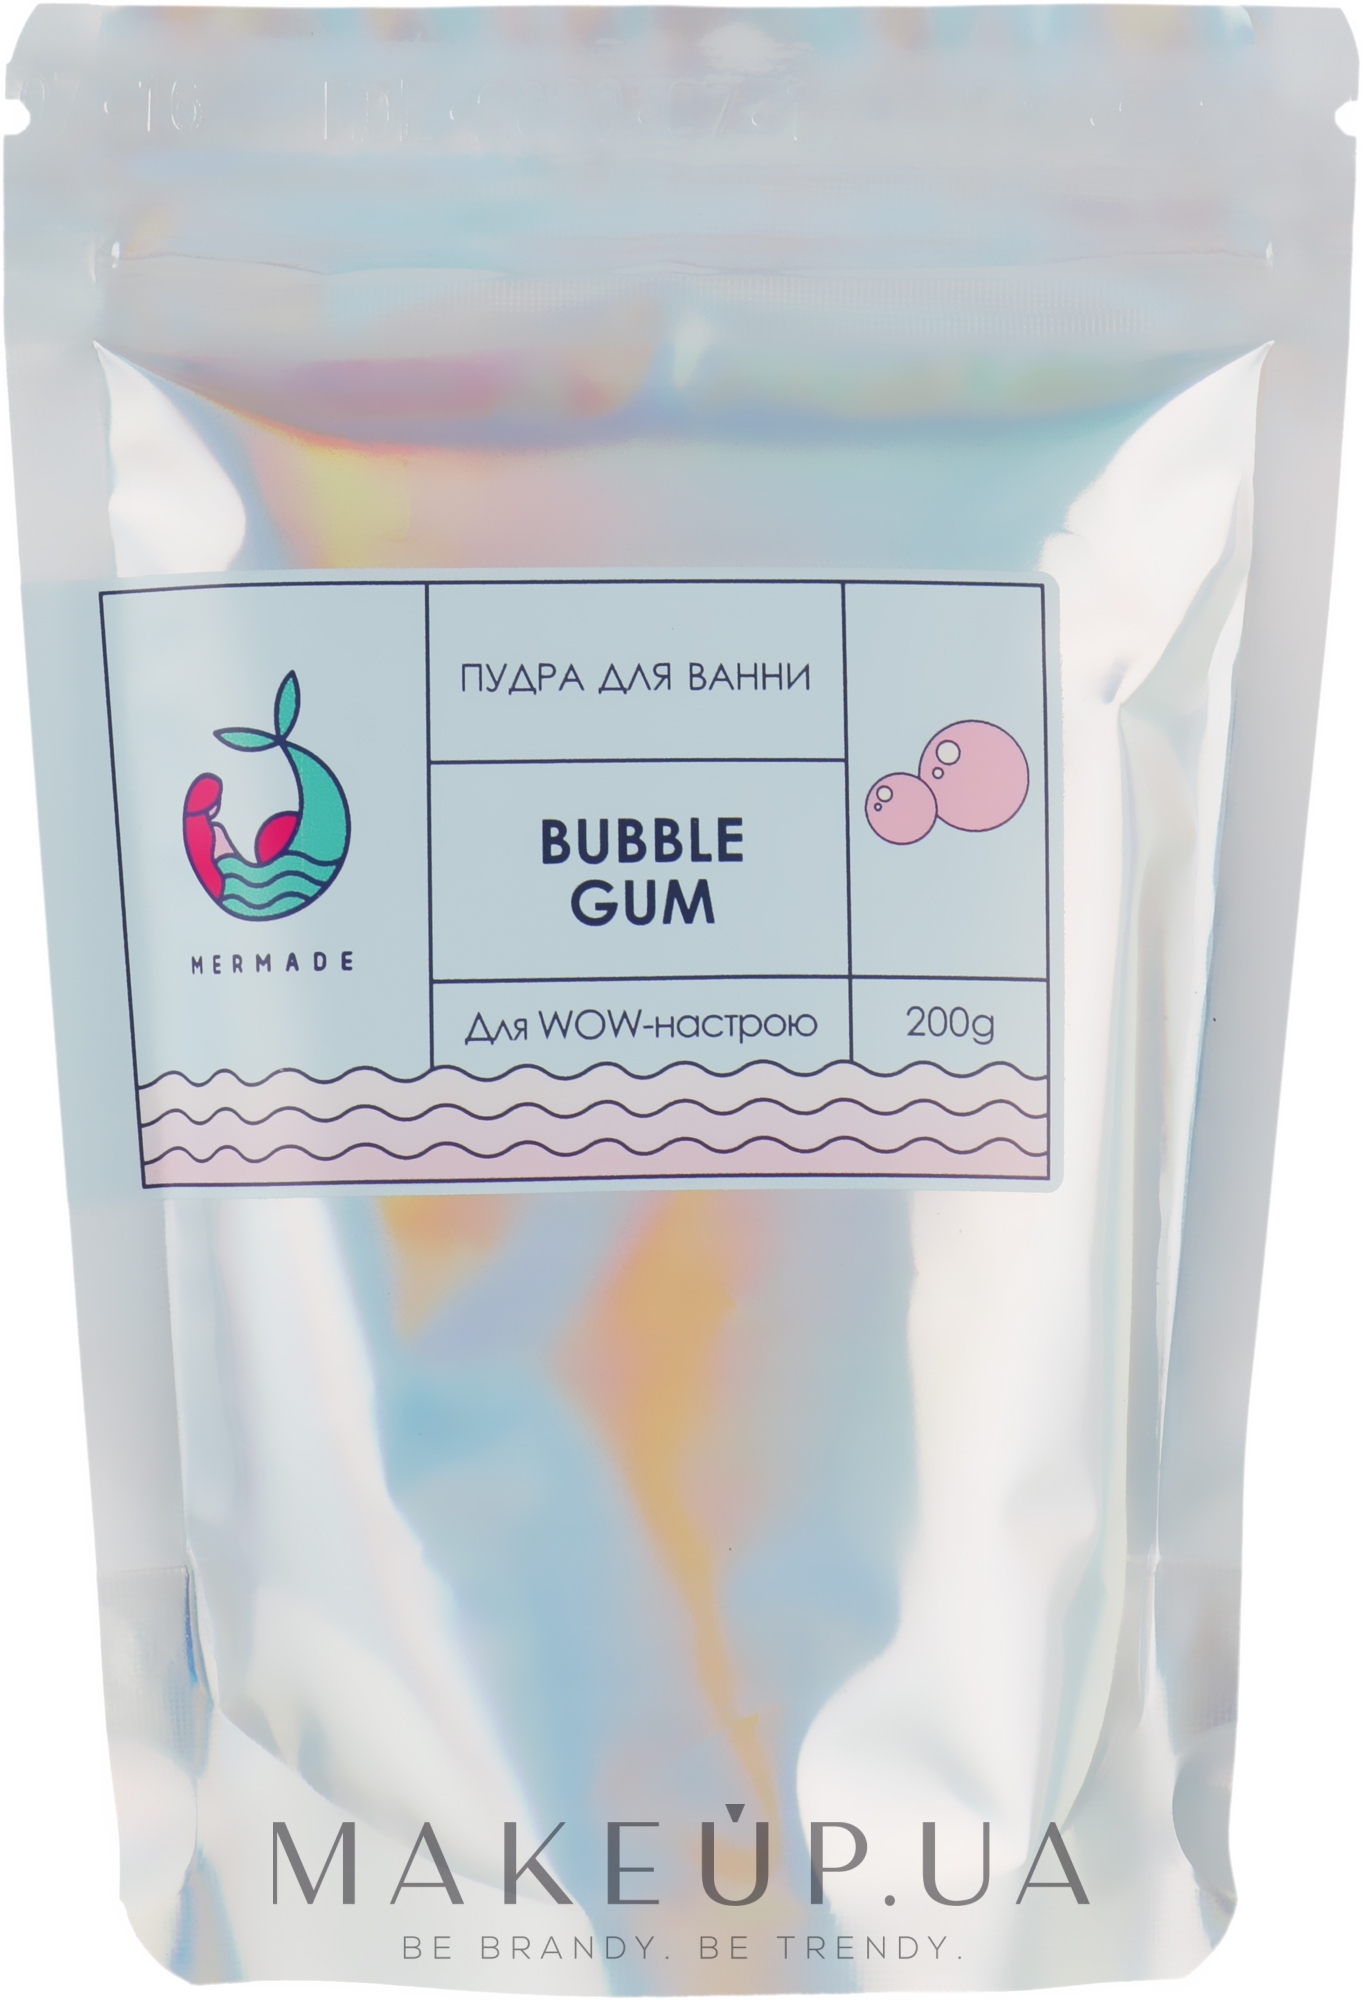 Пудра для ванни - Mermade Bubble Gum — фото 200g